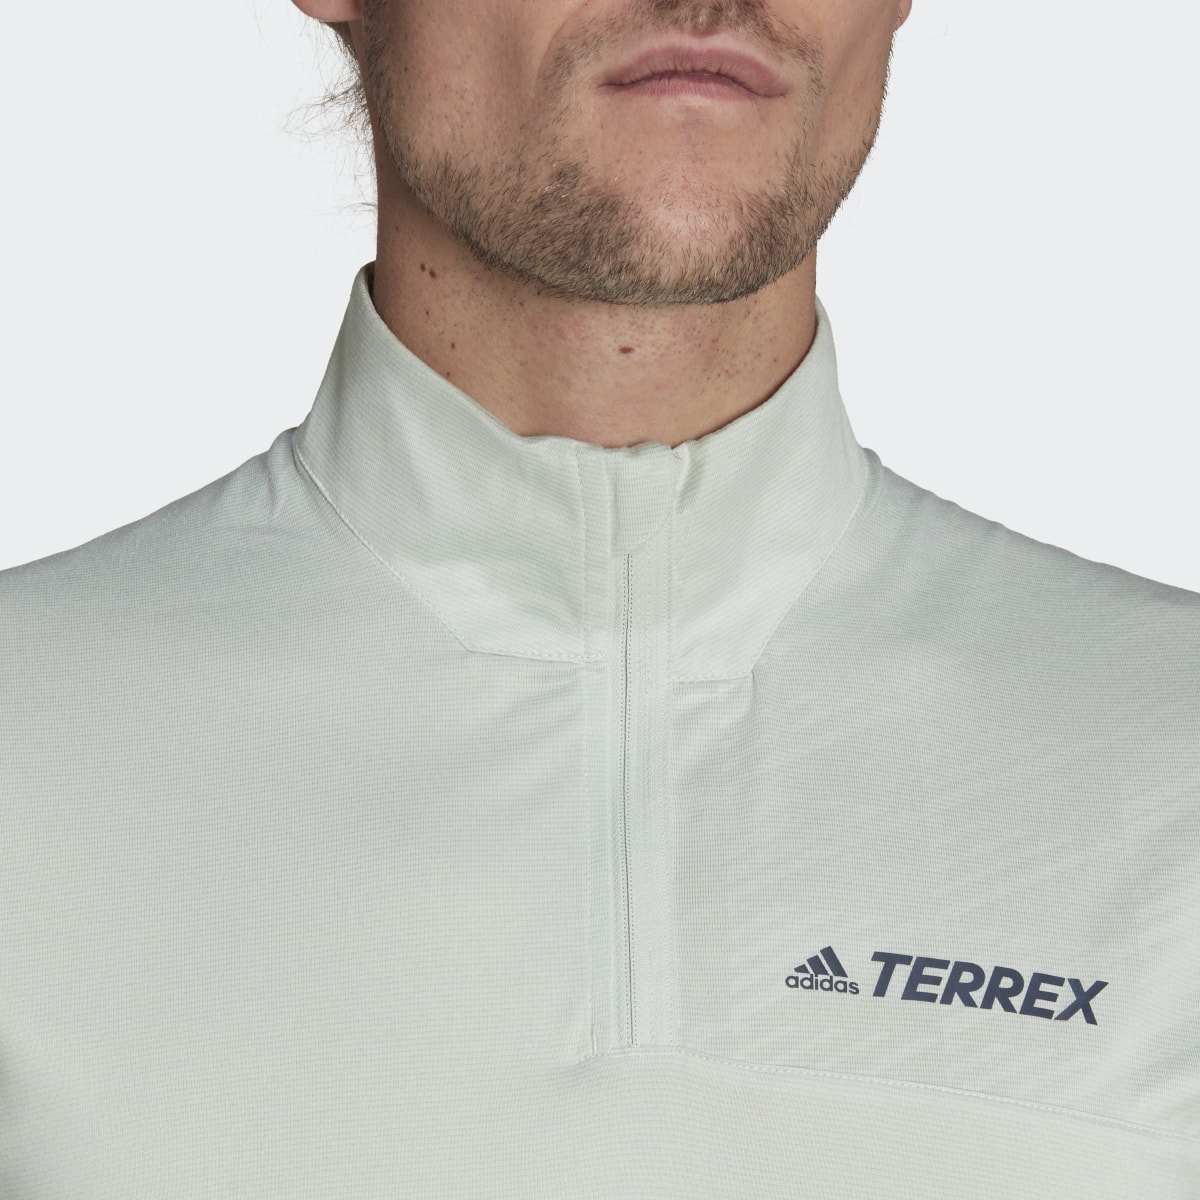 Adidas Terrex Multi Half-Zip Long-Sleeve Top. 6